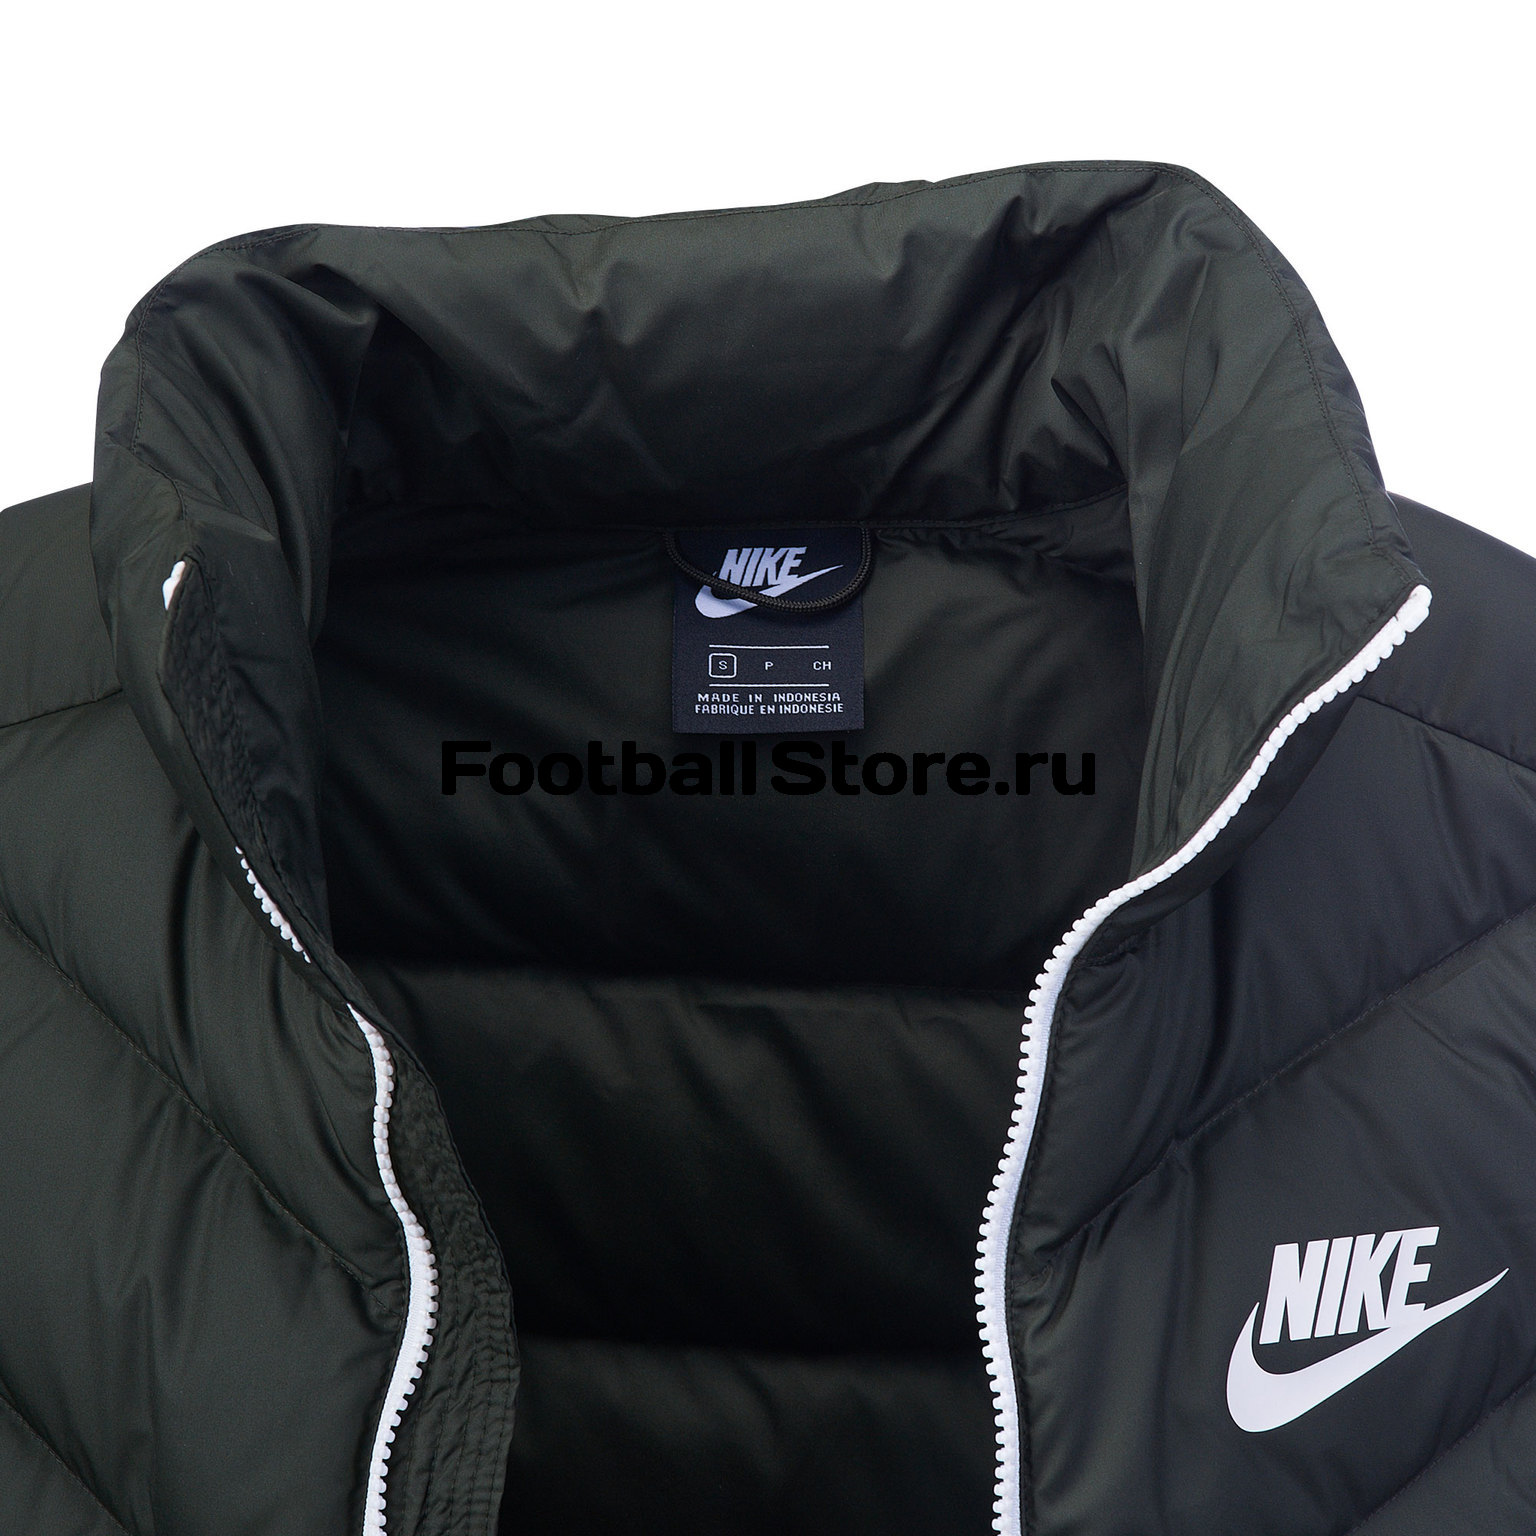 Жилет Nike Down Fill Vest 928859-355